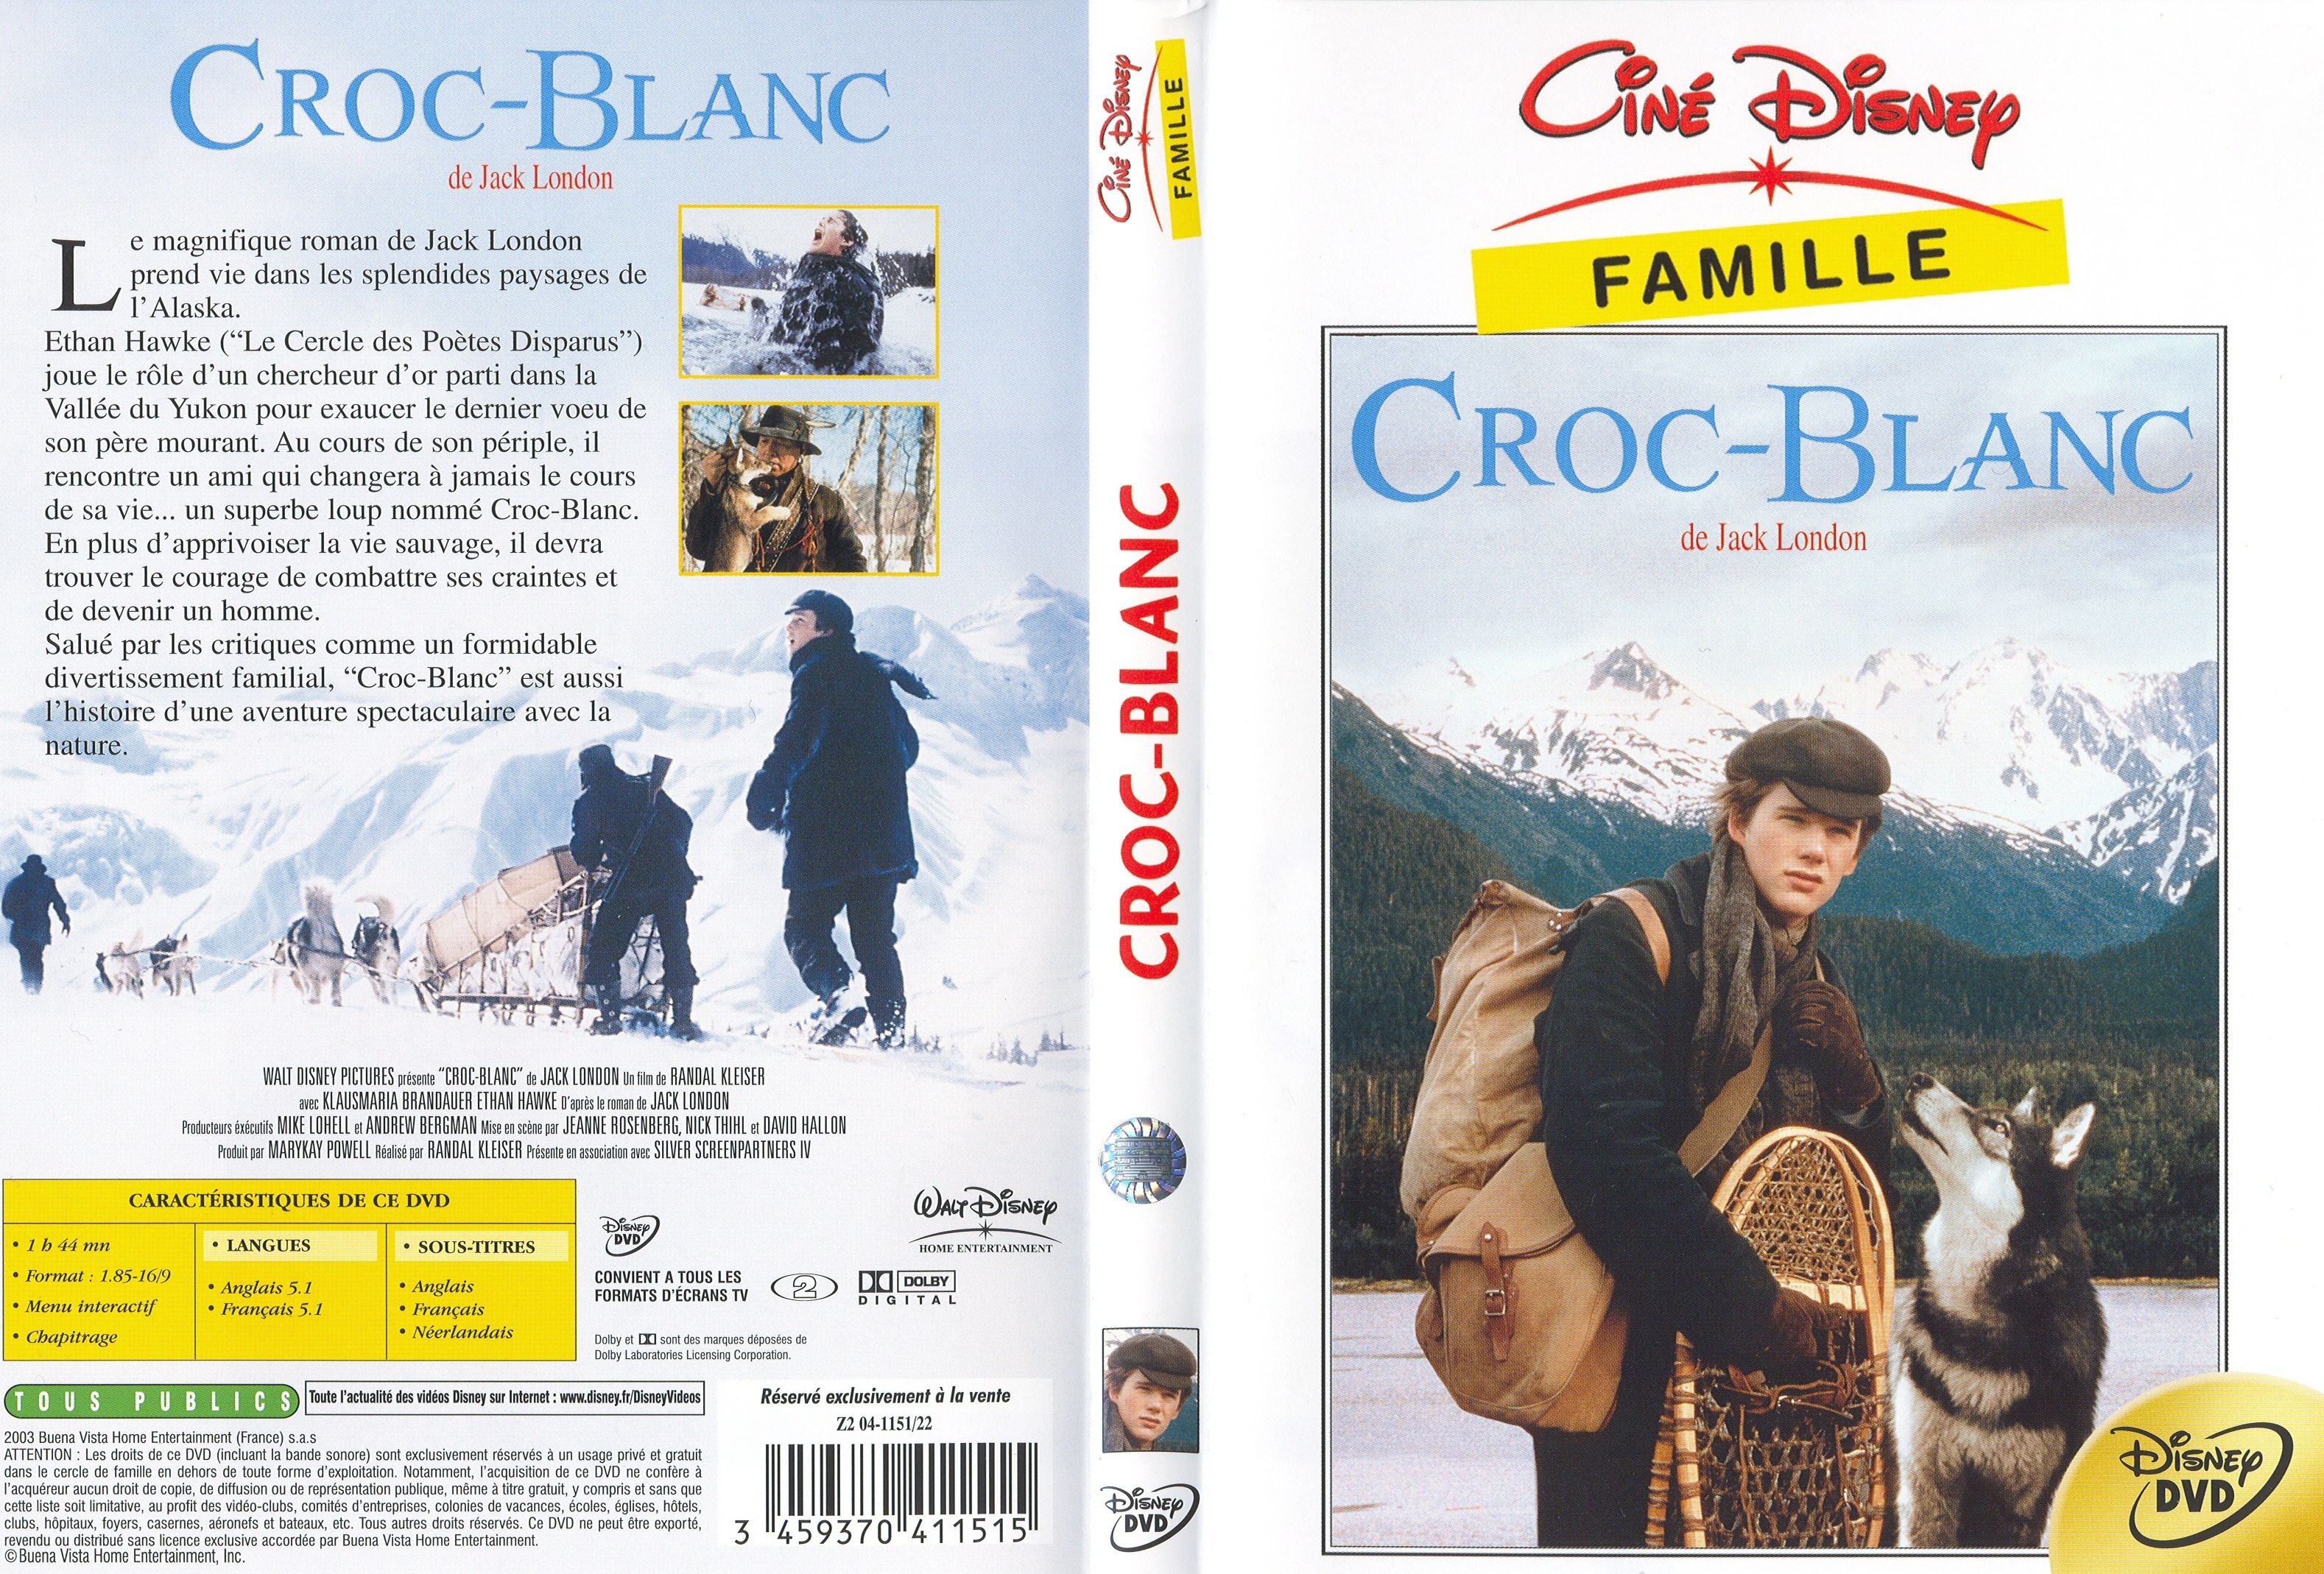 Jaquette DVD Croc-blanc v2